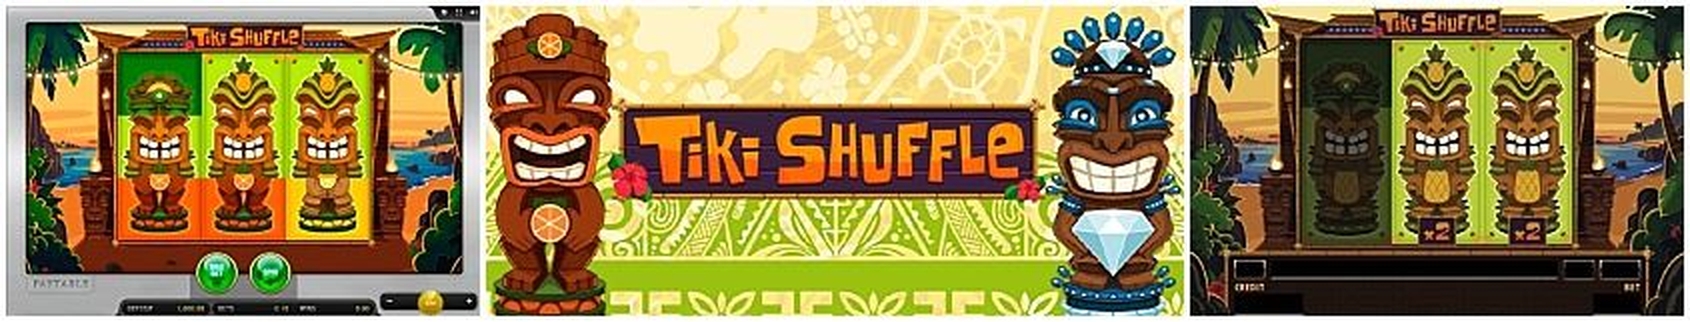 The Tiki Shuffle Online Slot Demo Game by Merkur Gaming